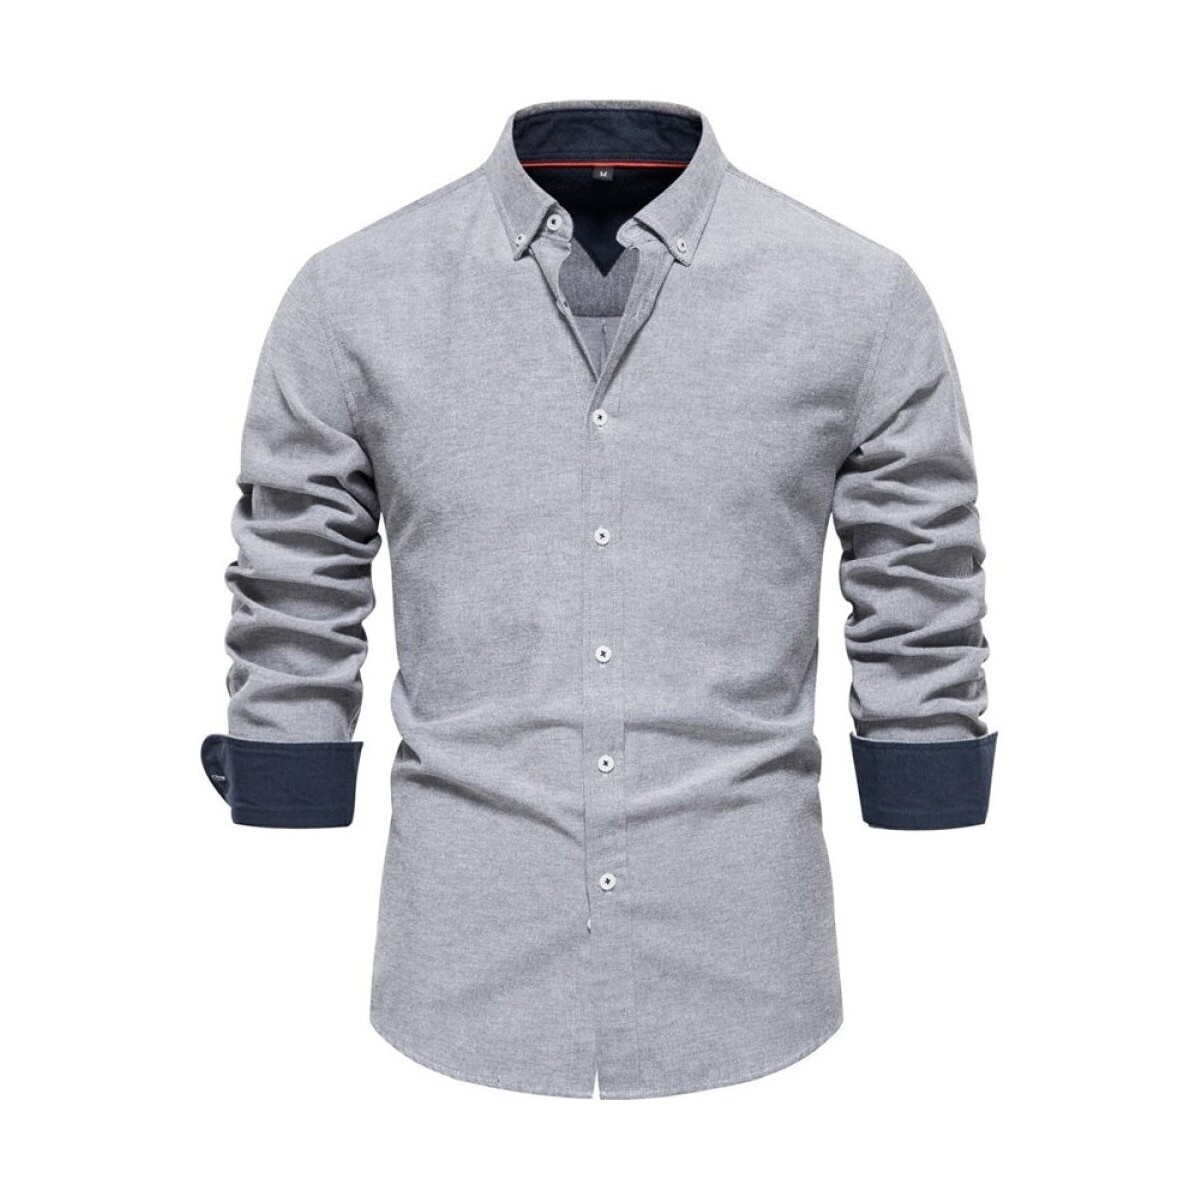 Kleidung Herren Langärmelige Hemden Atom SH700 Grau